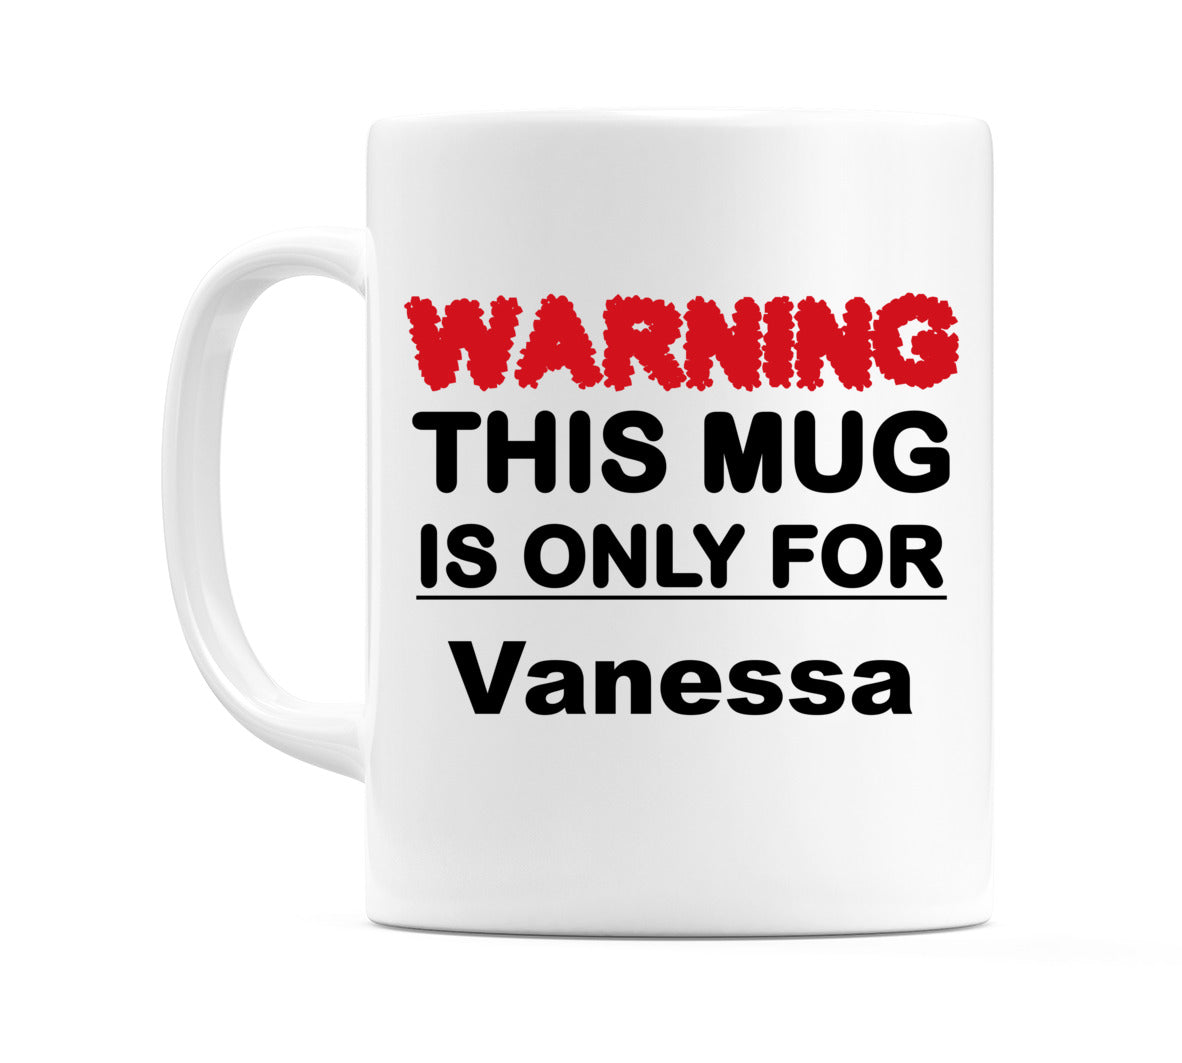 Warning This Mug is ONLY for Vanessa Mug